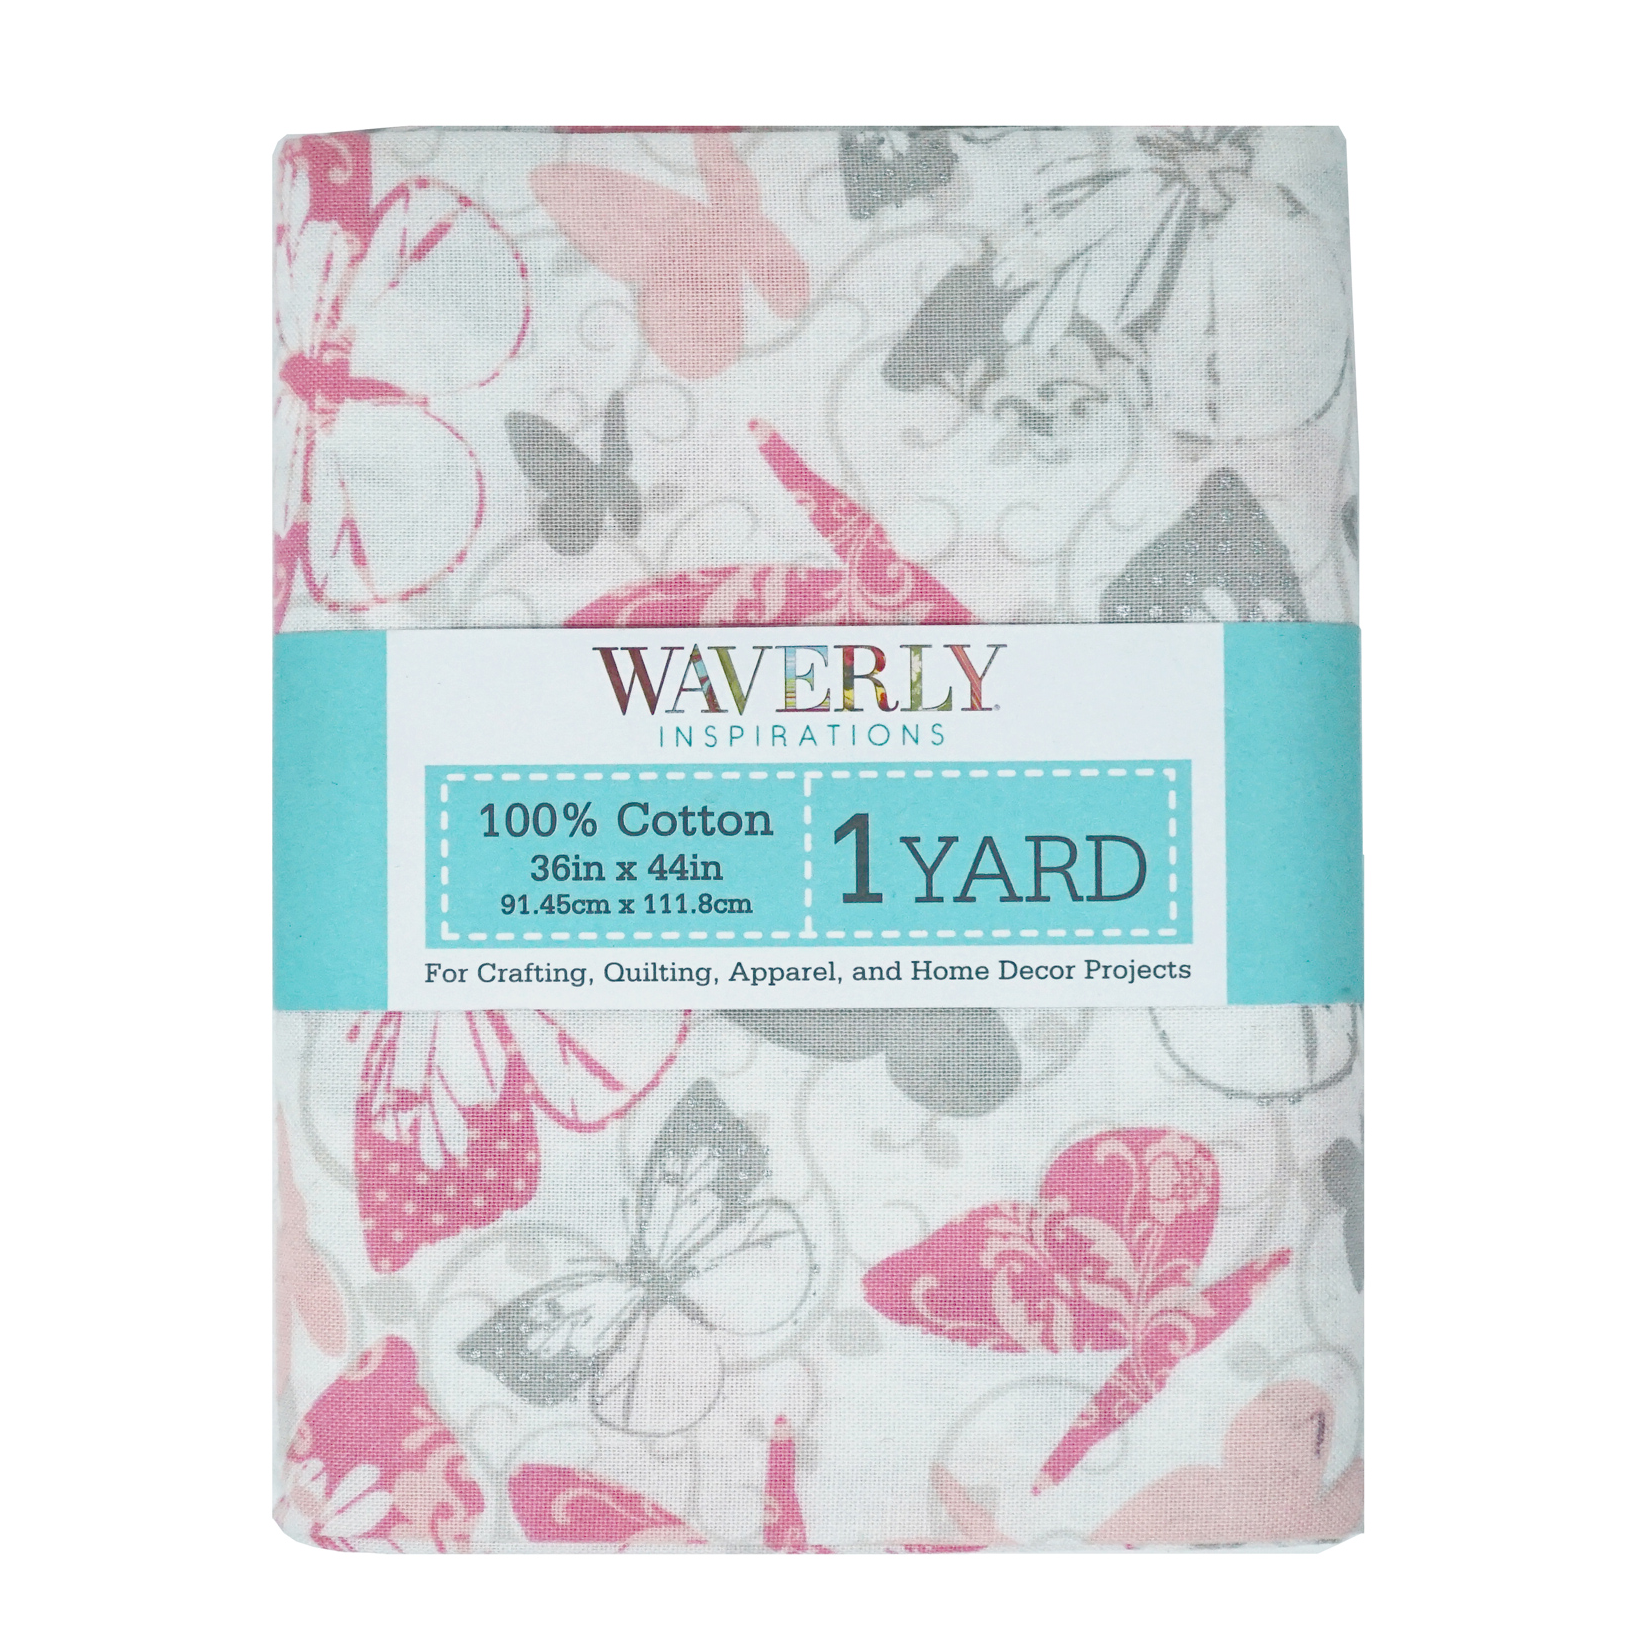 Waverly Inspirations Fabric, per Yard